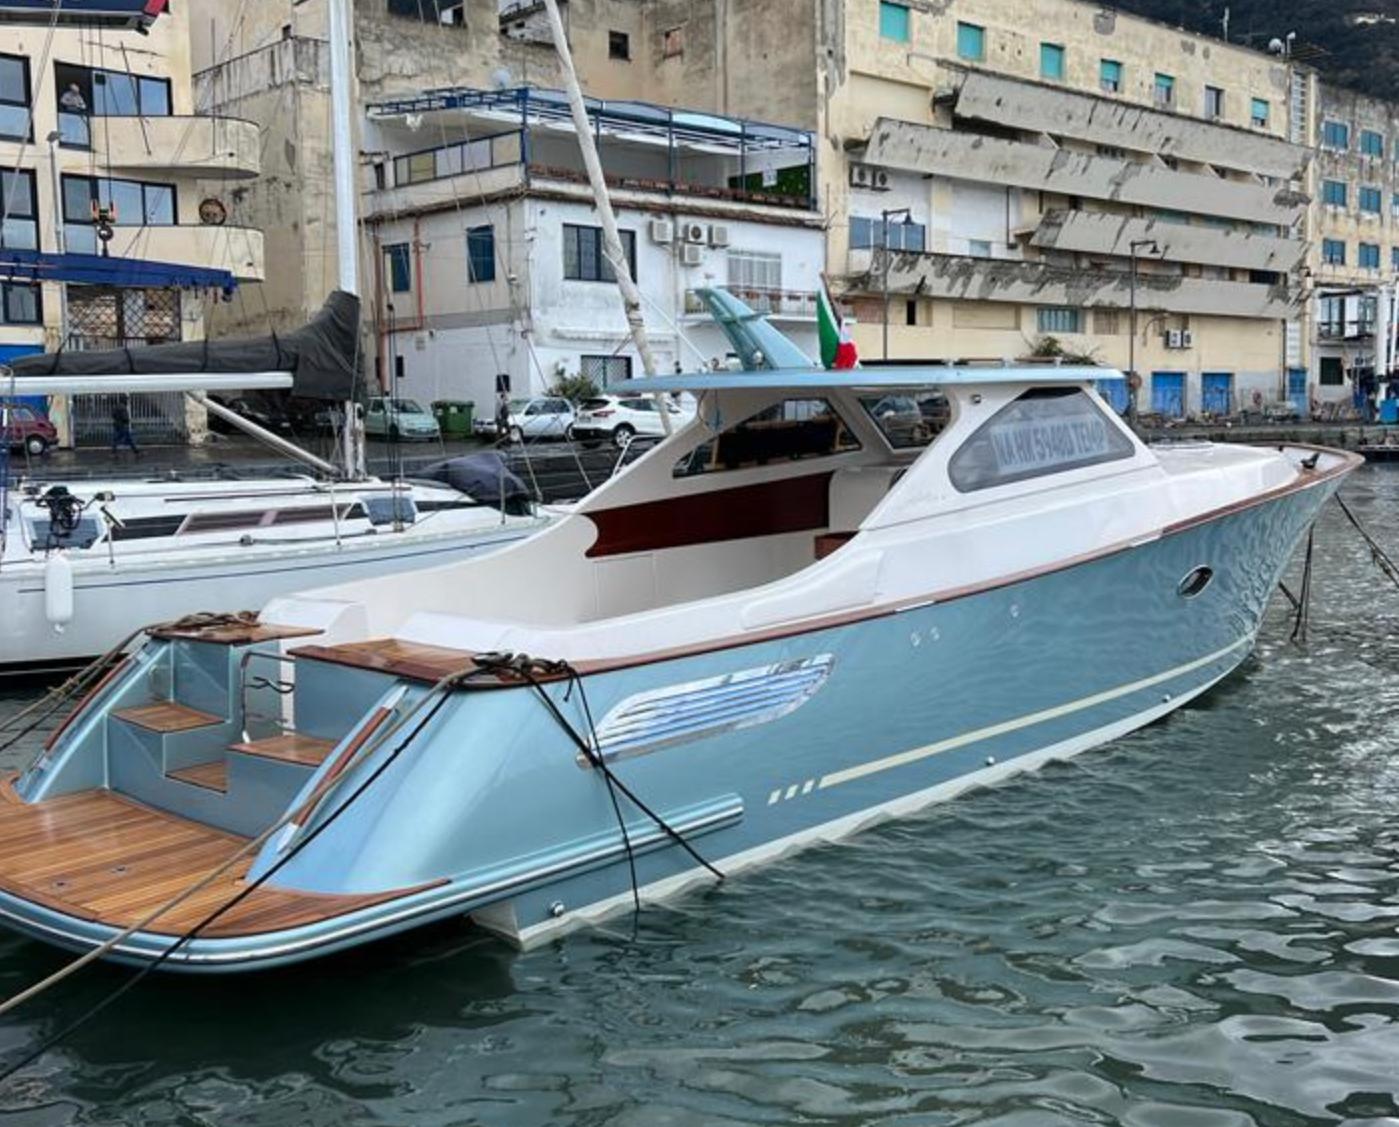 2023 Gagliotta Lobster 35 Downeast à vendre - YachtWorld